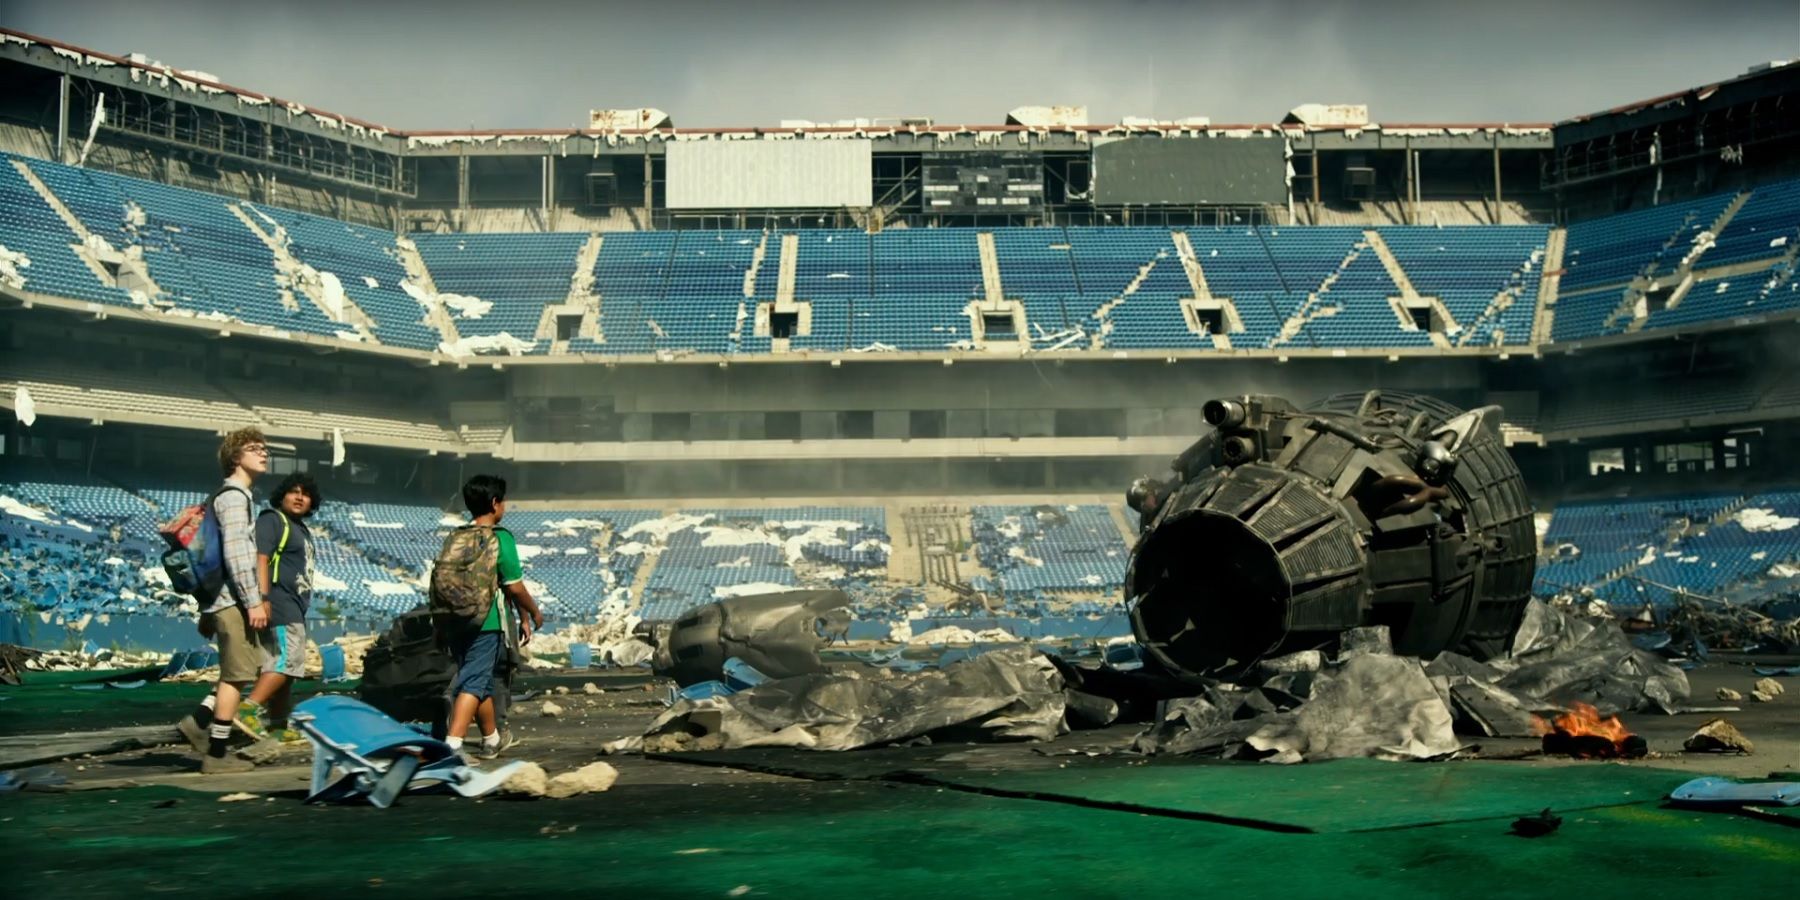 Transformers The Last Knight Trailer - Stadium